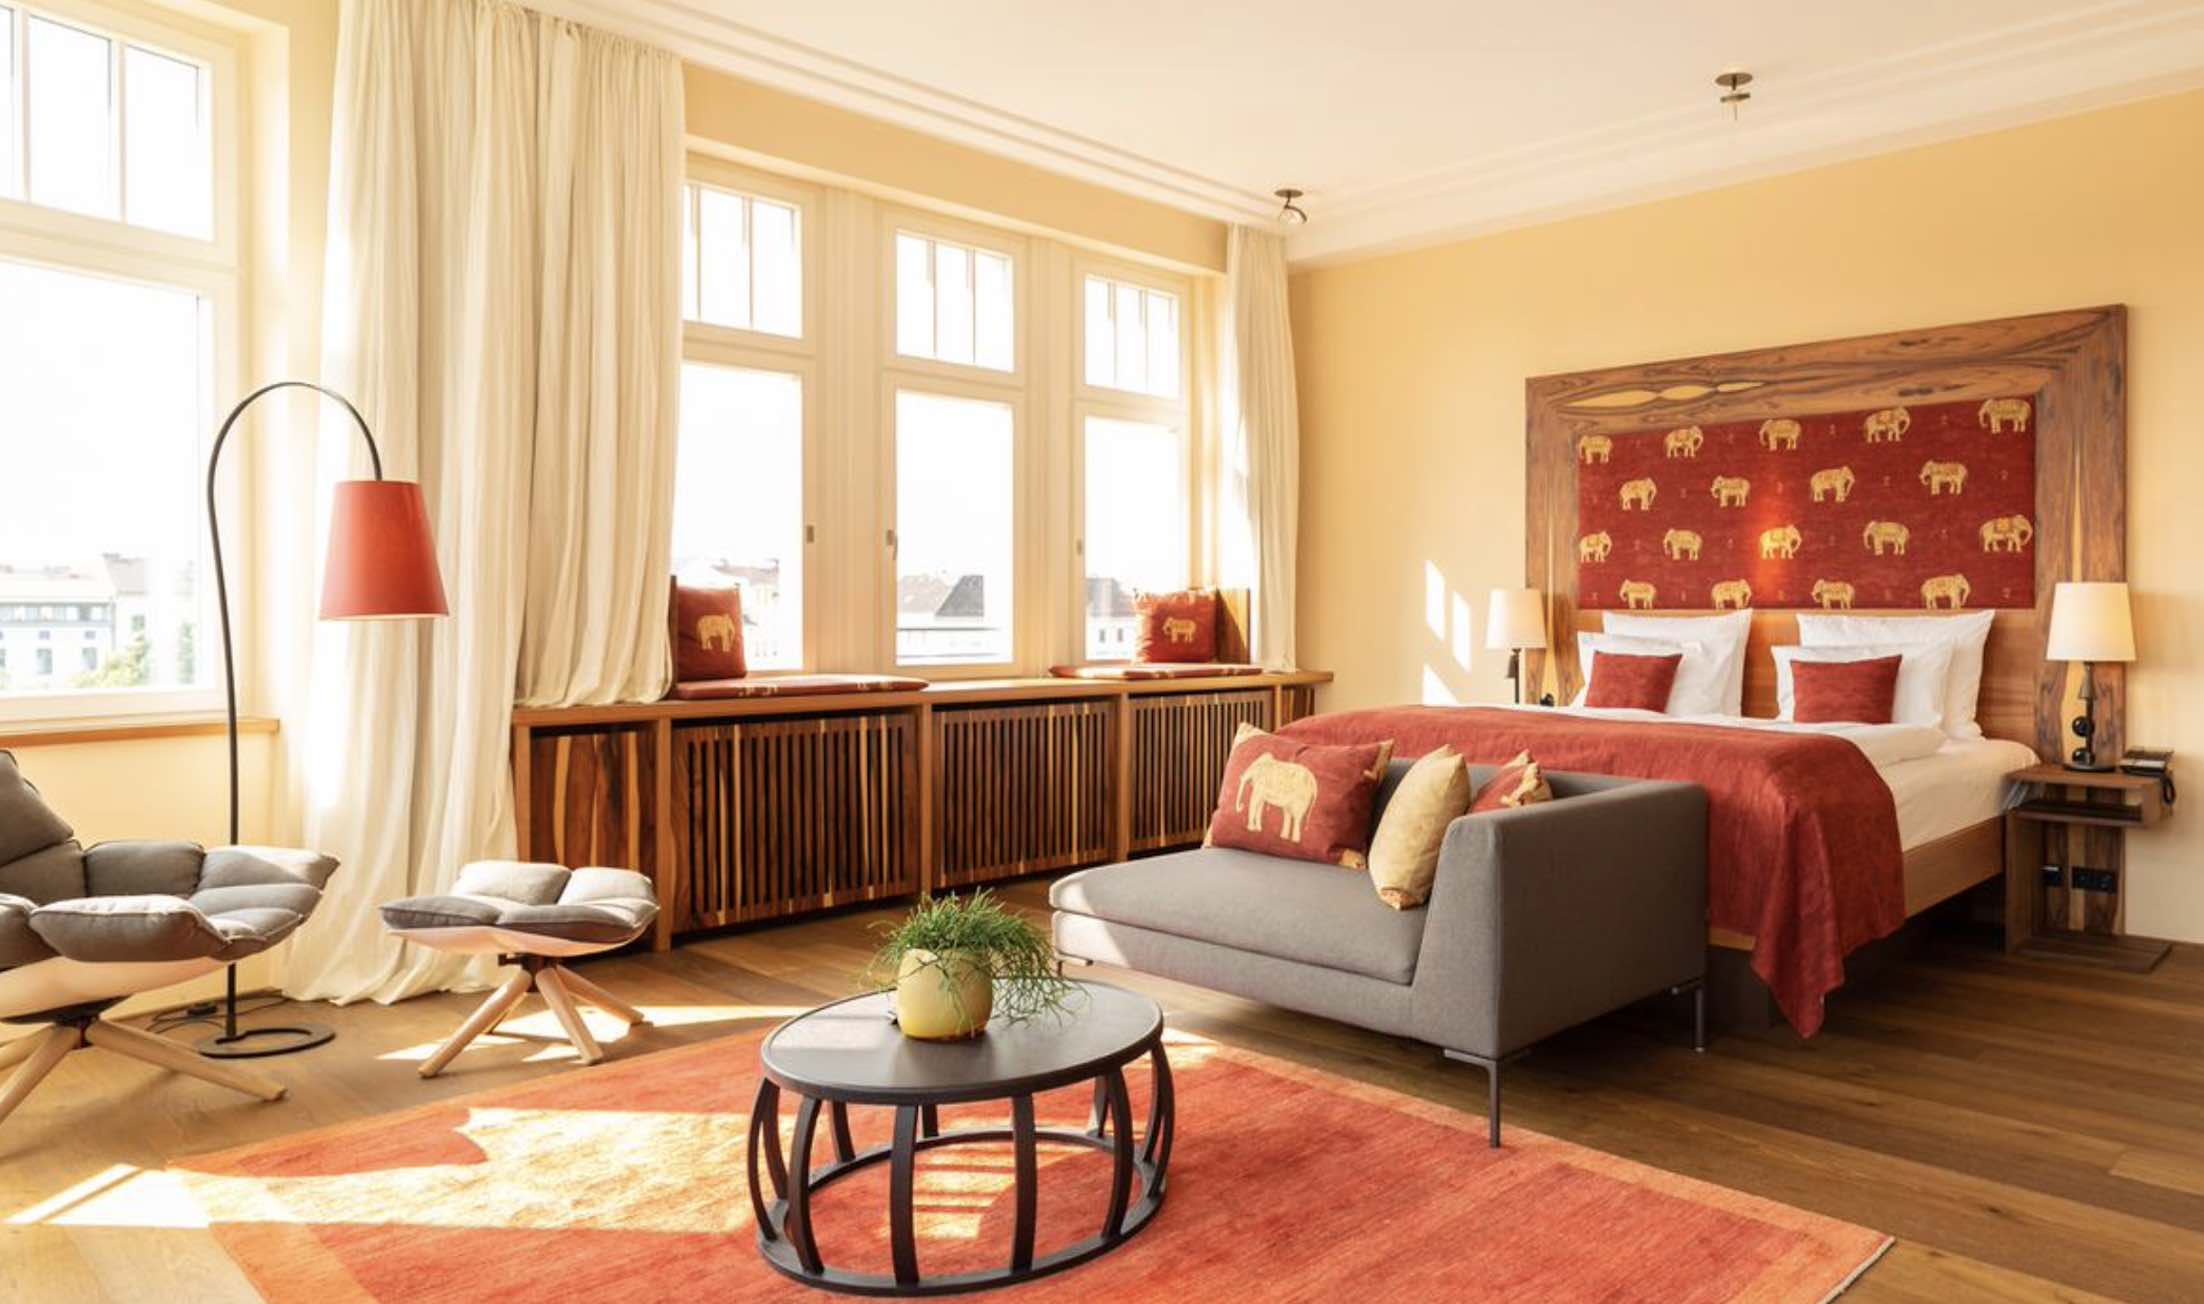 Orania.Berlin luxury bedroom with big windows